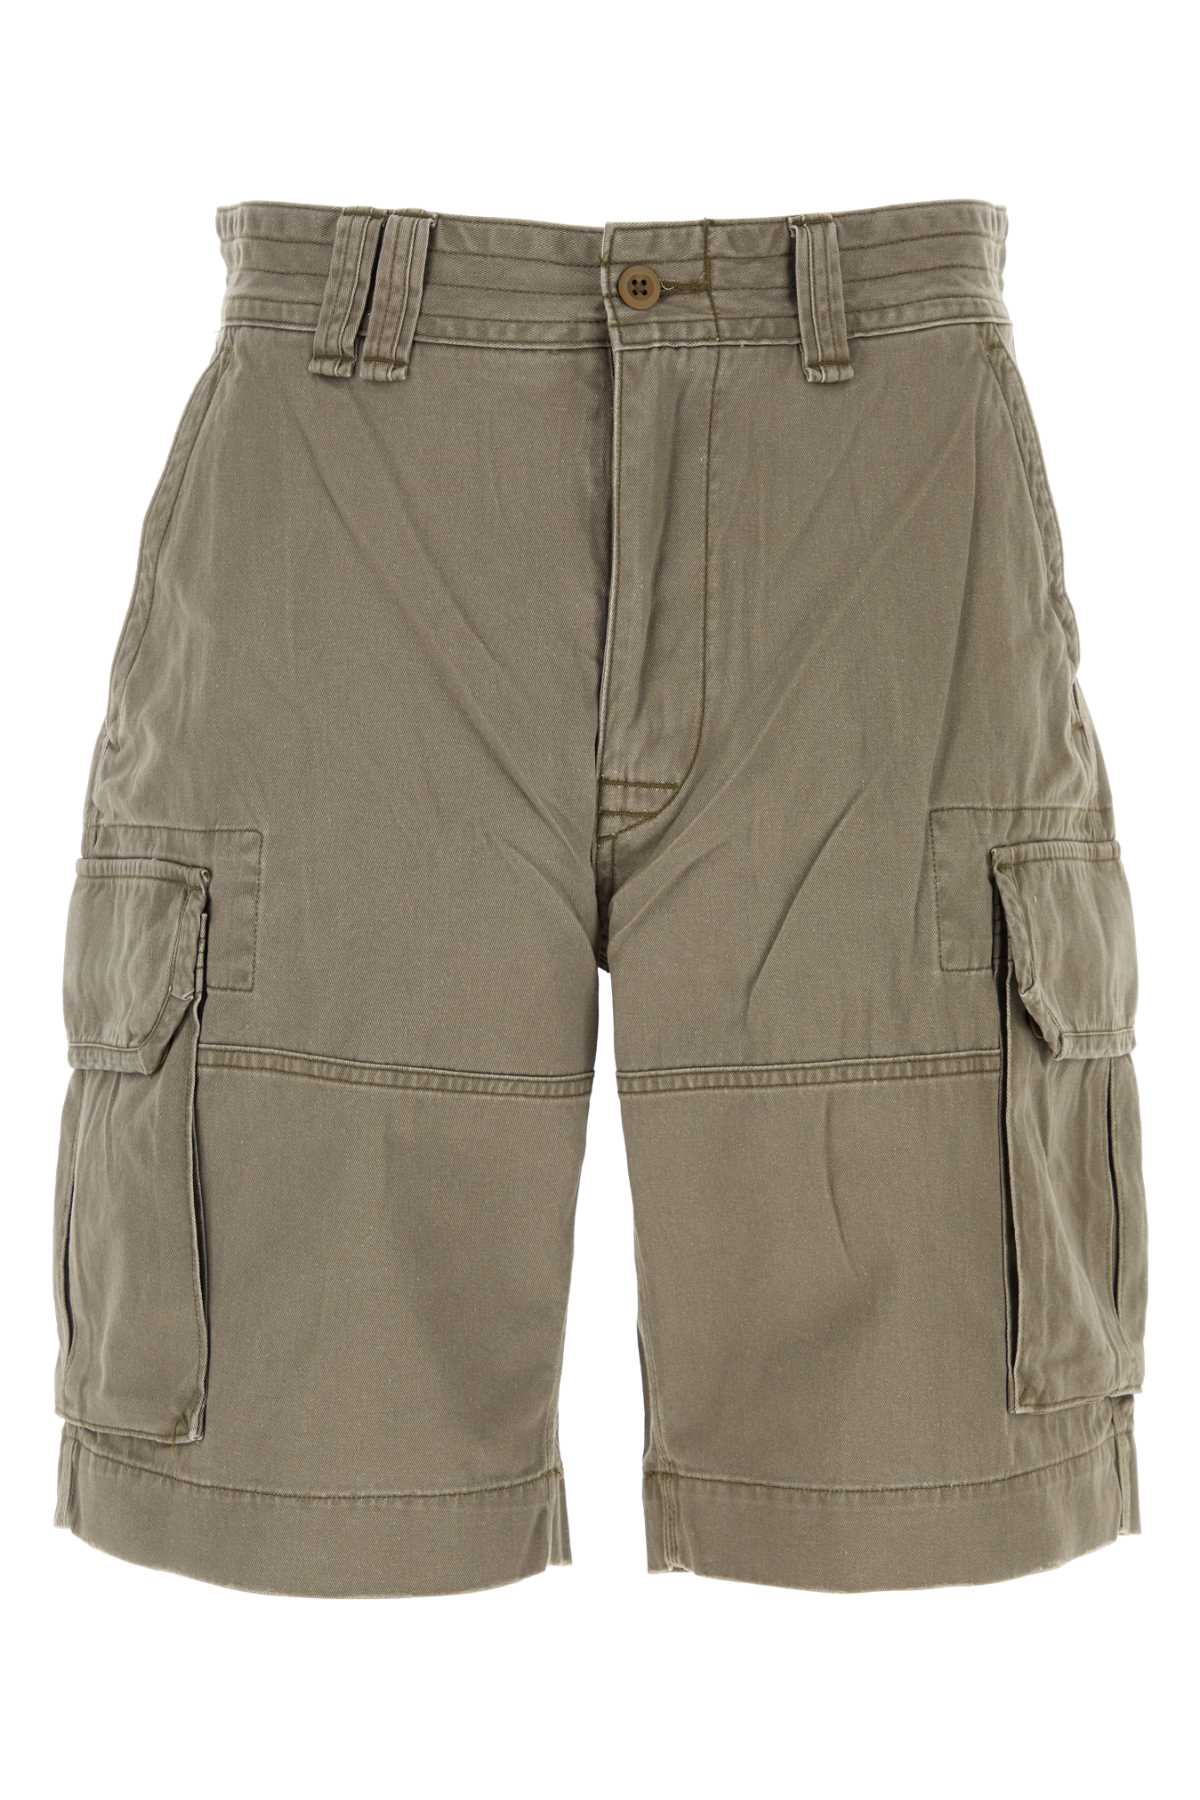 Dove Grey Cotton Bermuda Shorts